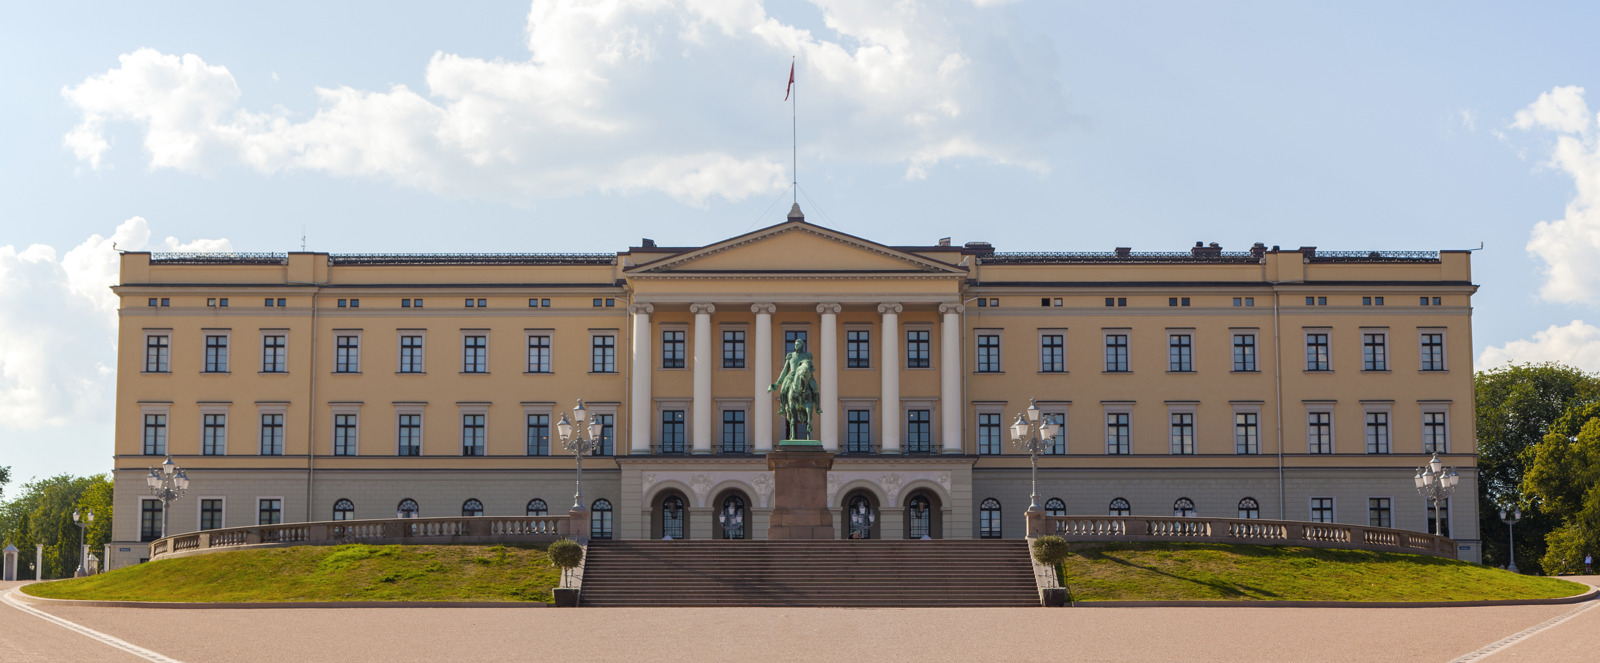 Slottet I Oslo. Foto.